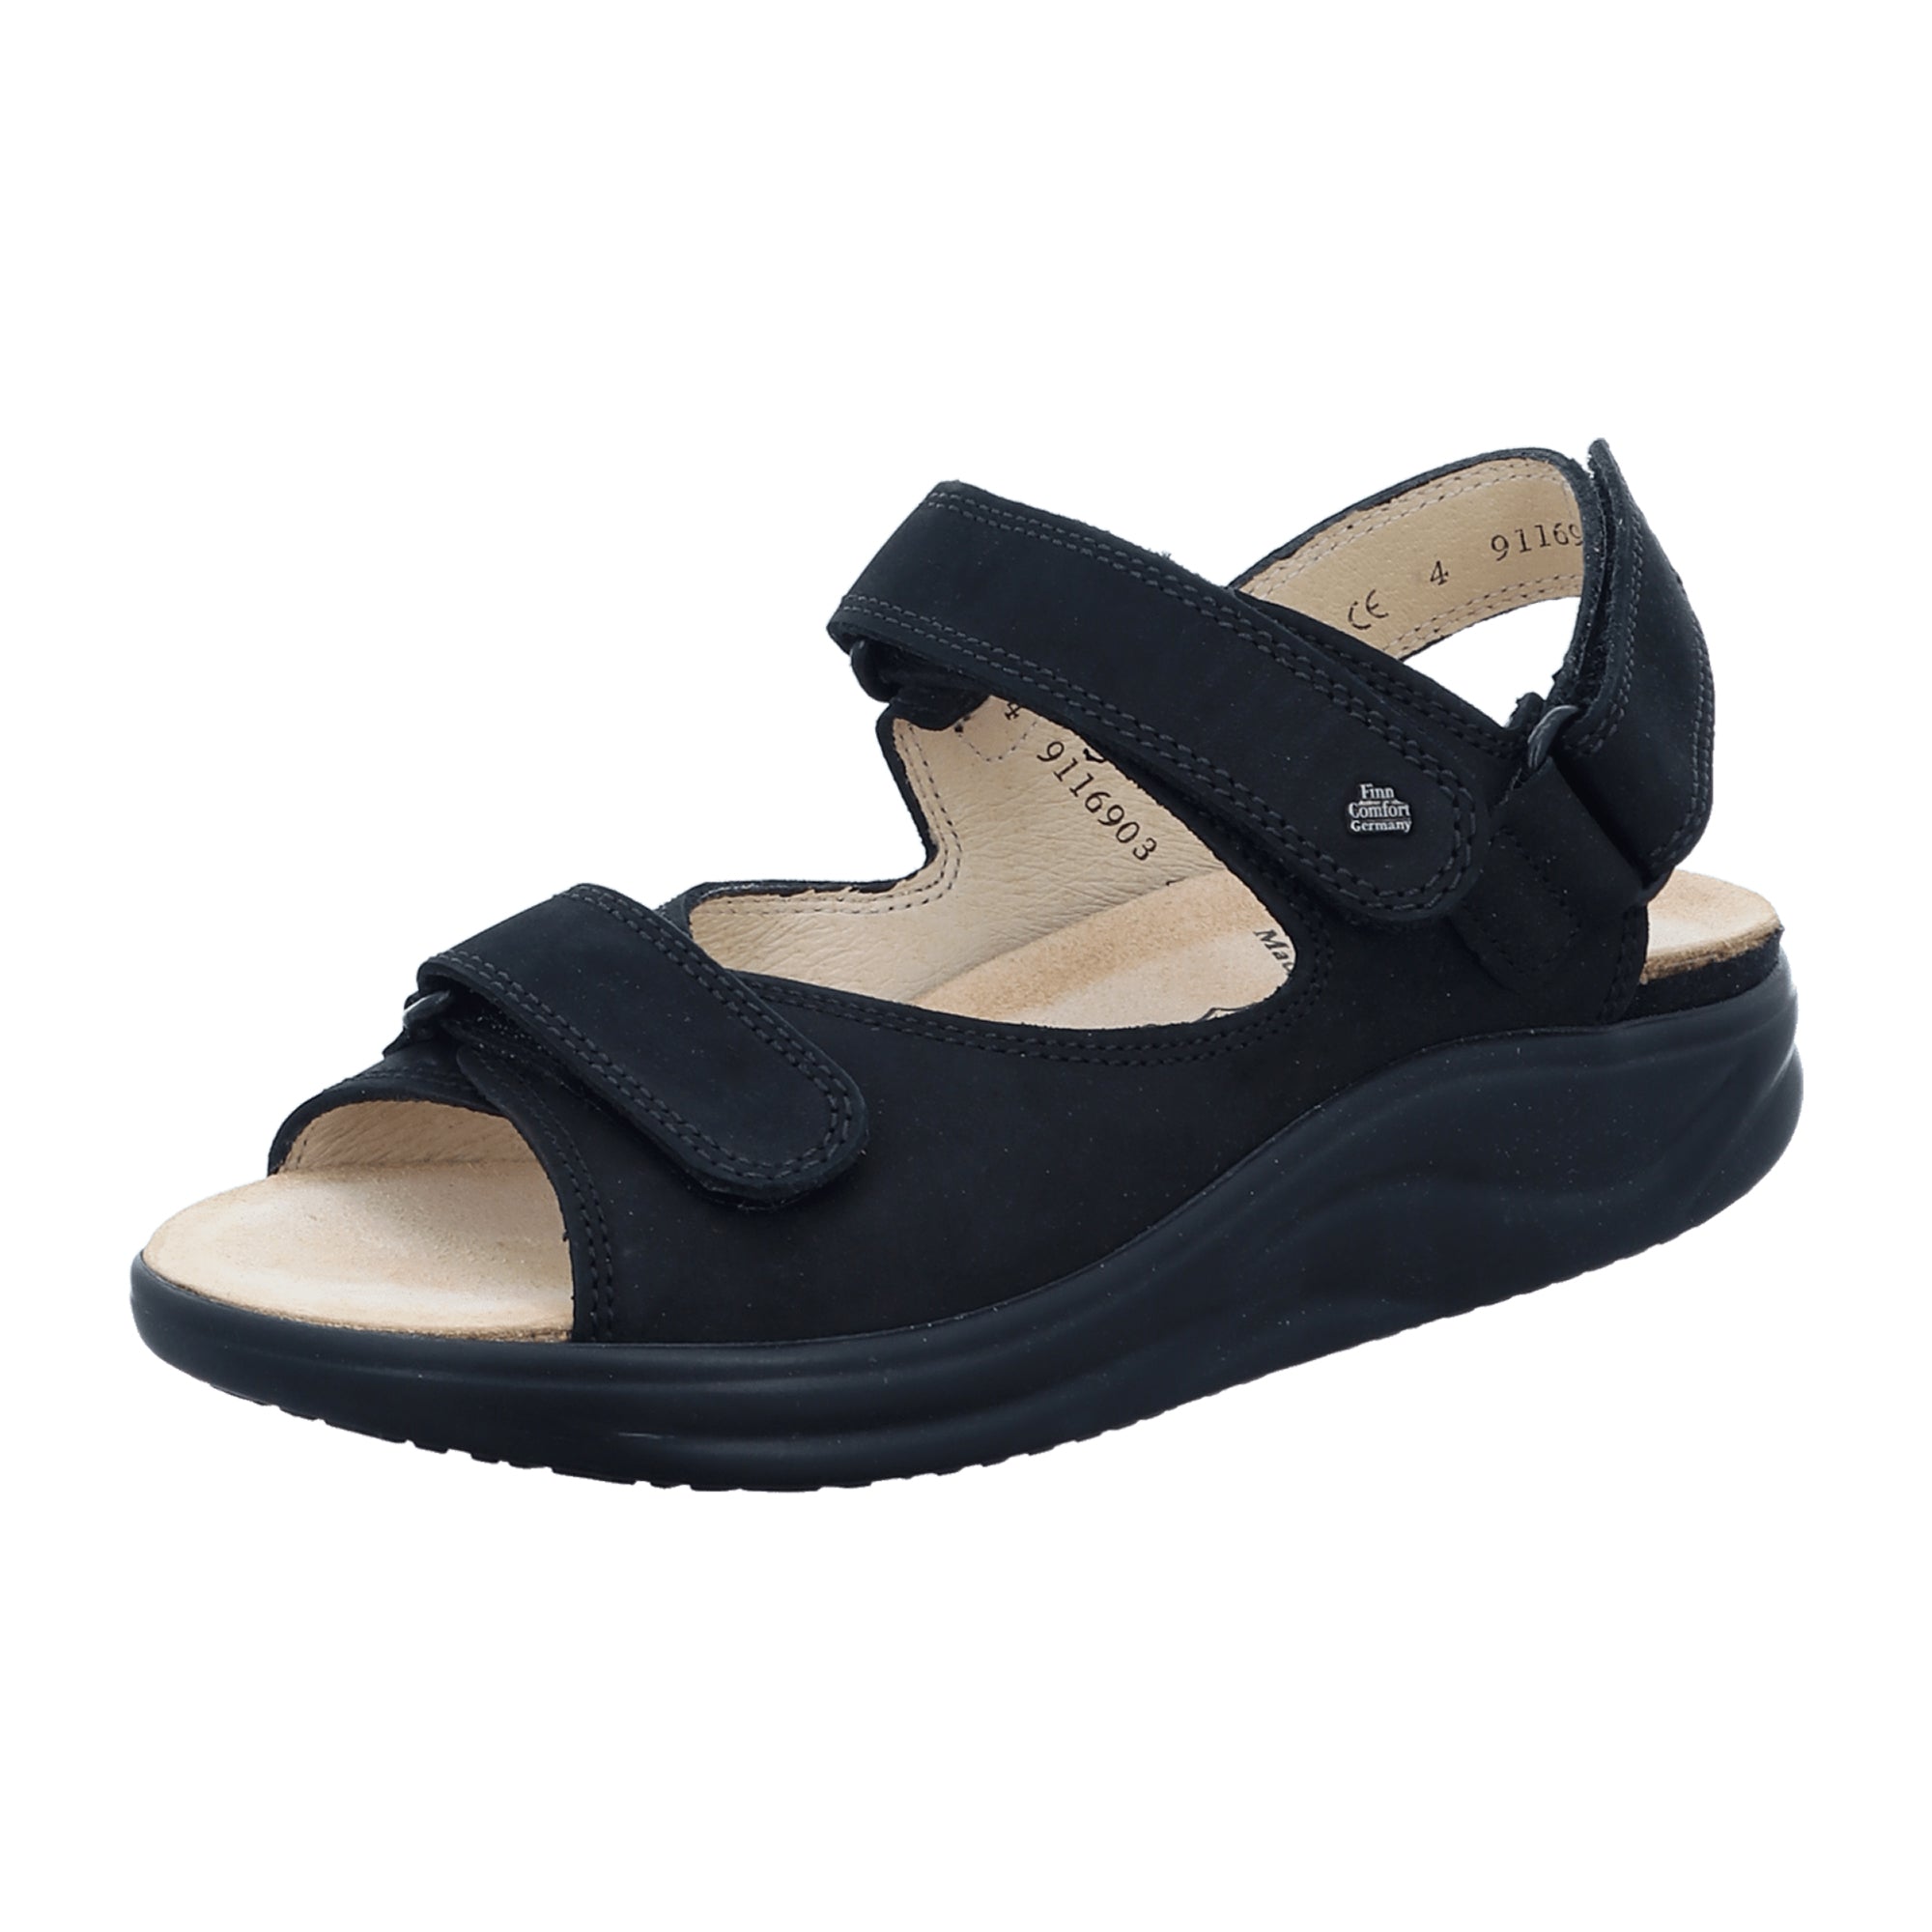 Finn Comfort Corinth Women's Comfort Sandals - Elegant Black Leather